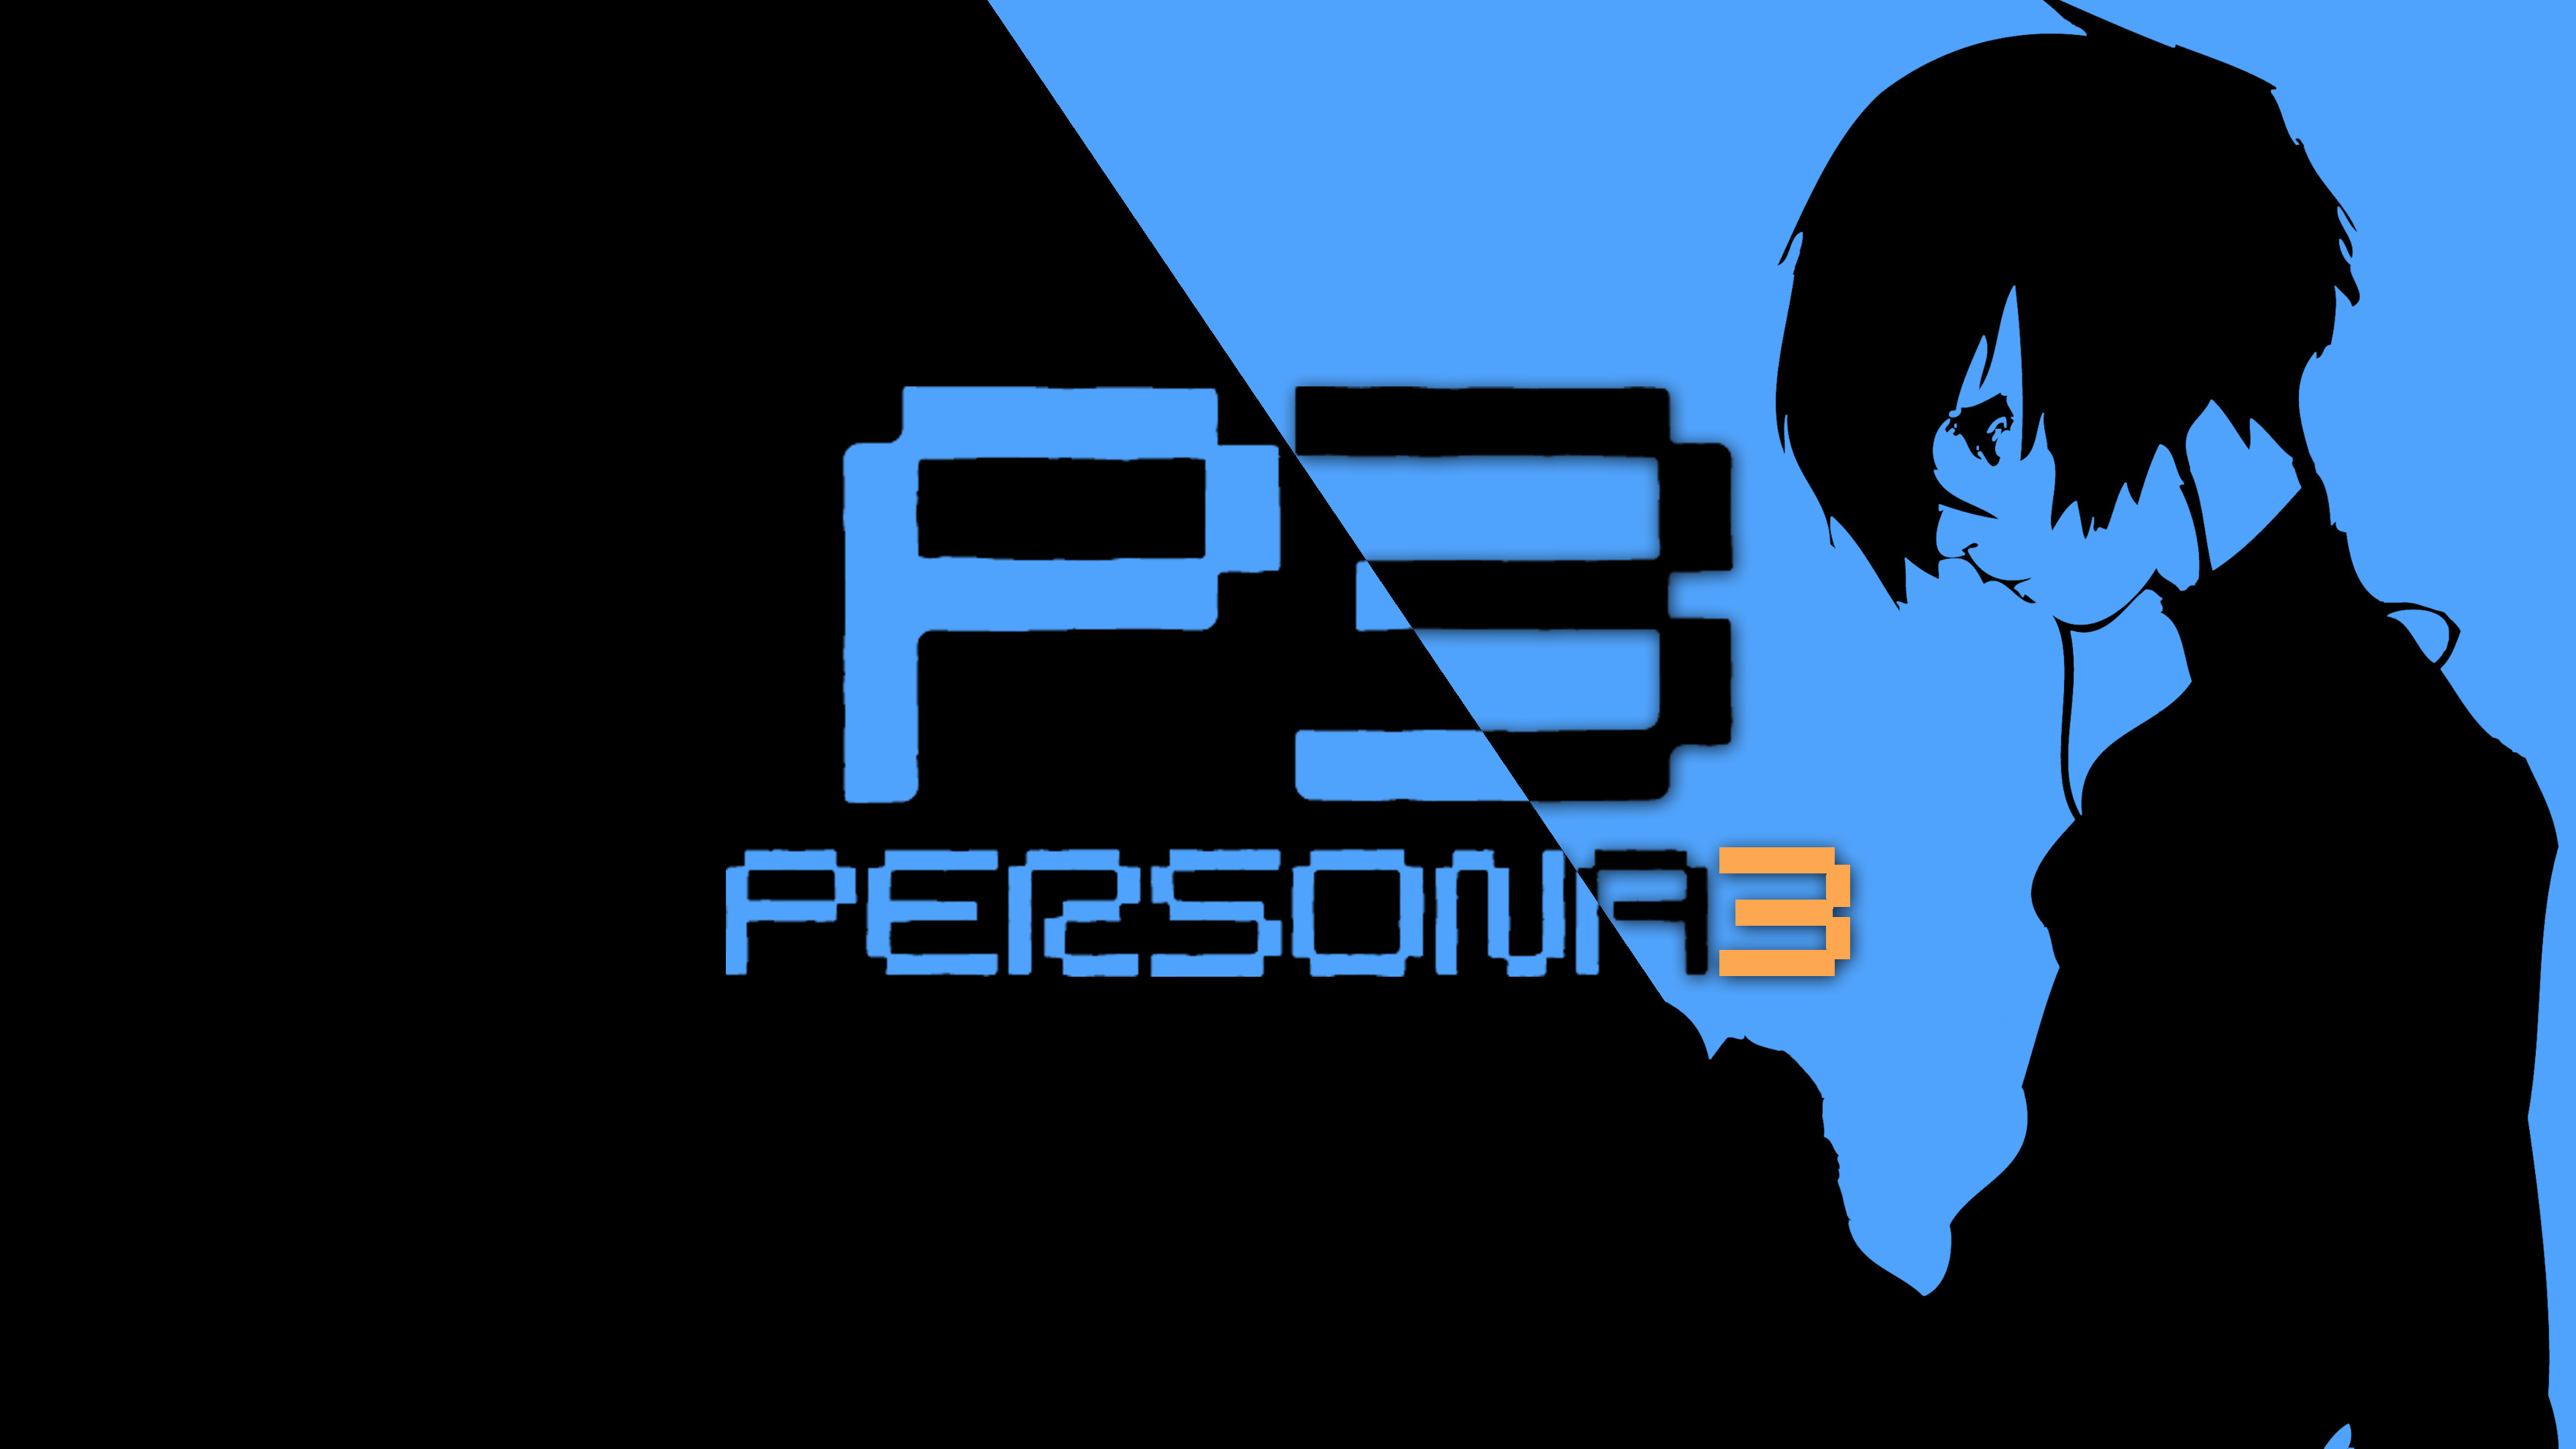 3840x2160 I made a minimalist Persona 3 wallpaper in 4K.